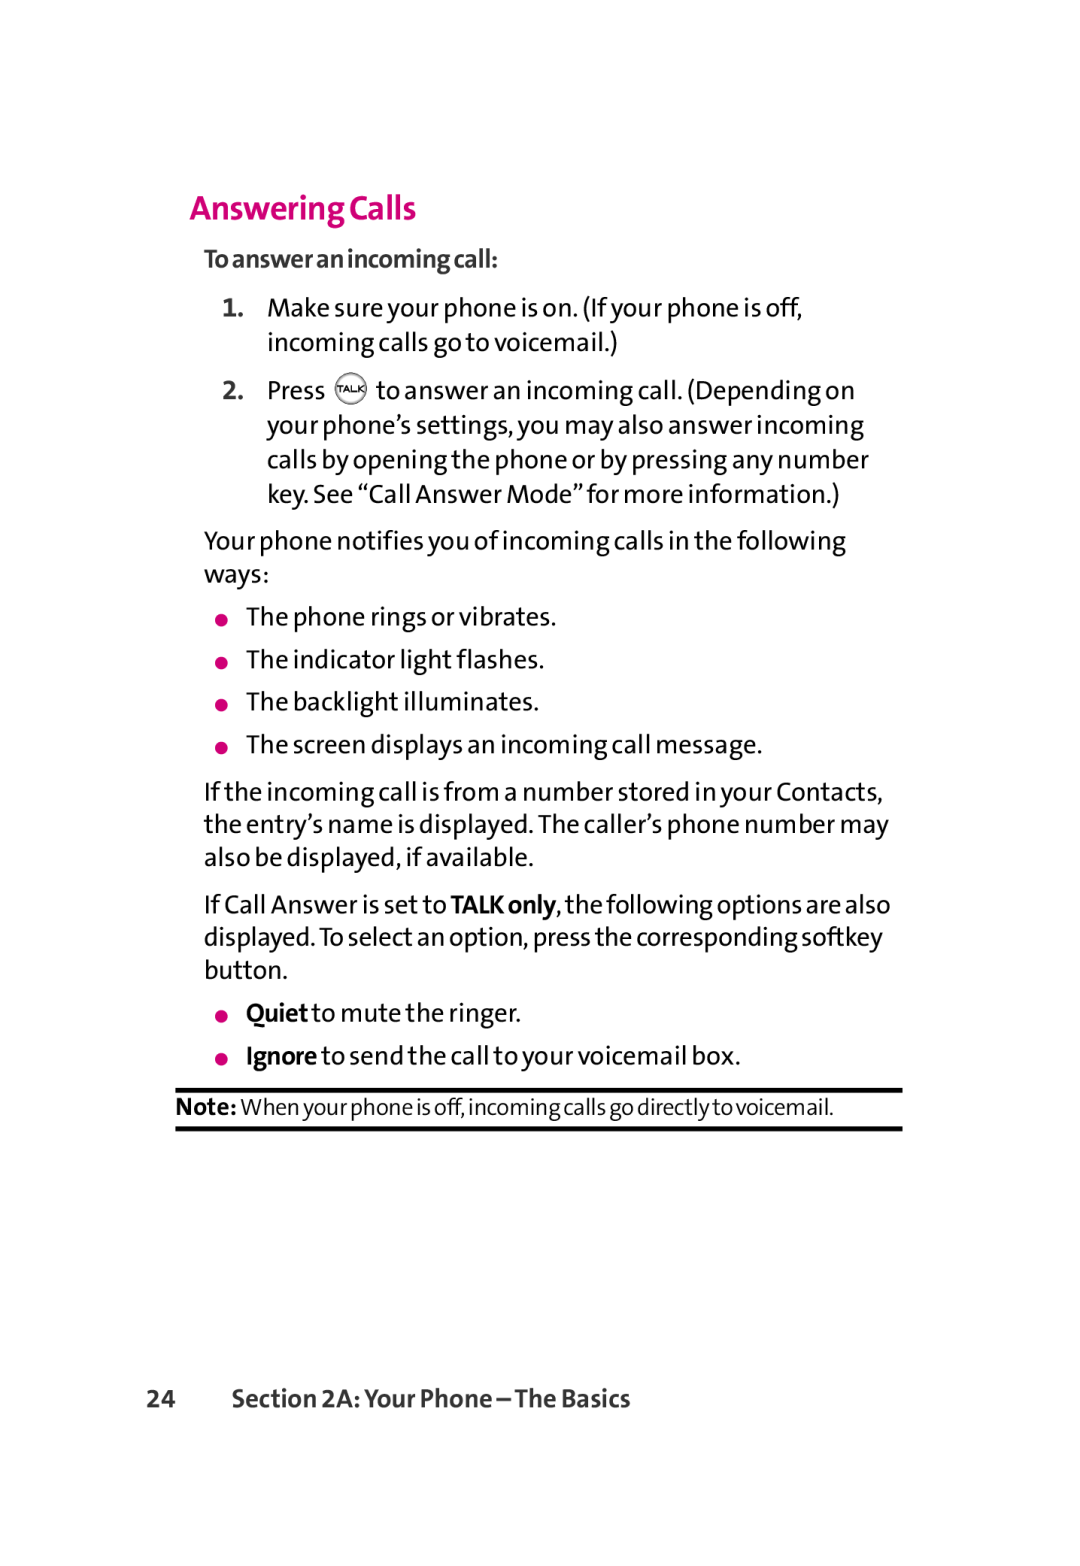 LG Electronics 350 manual Answering Calls, Toansweranincomingcall, A Your Phone - The Basics 